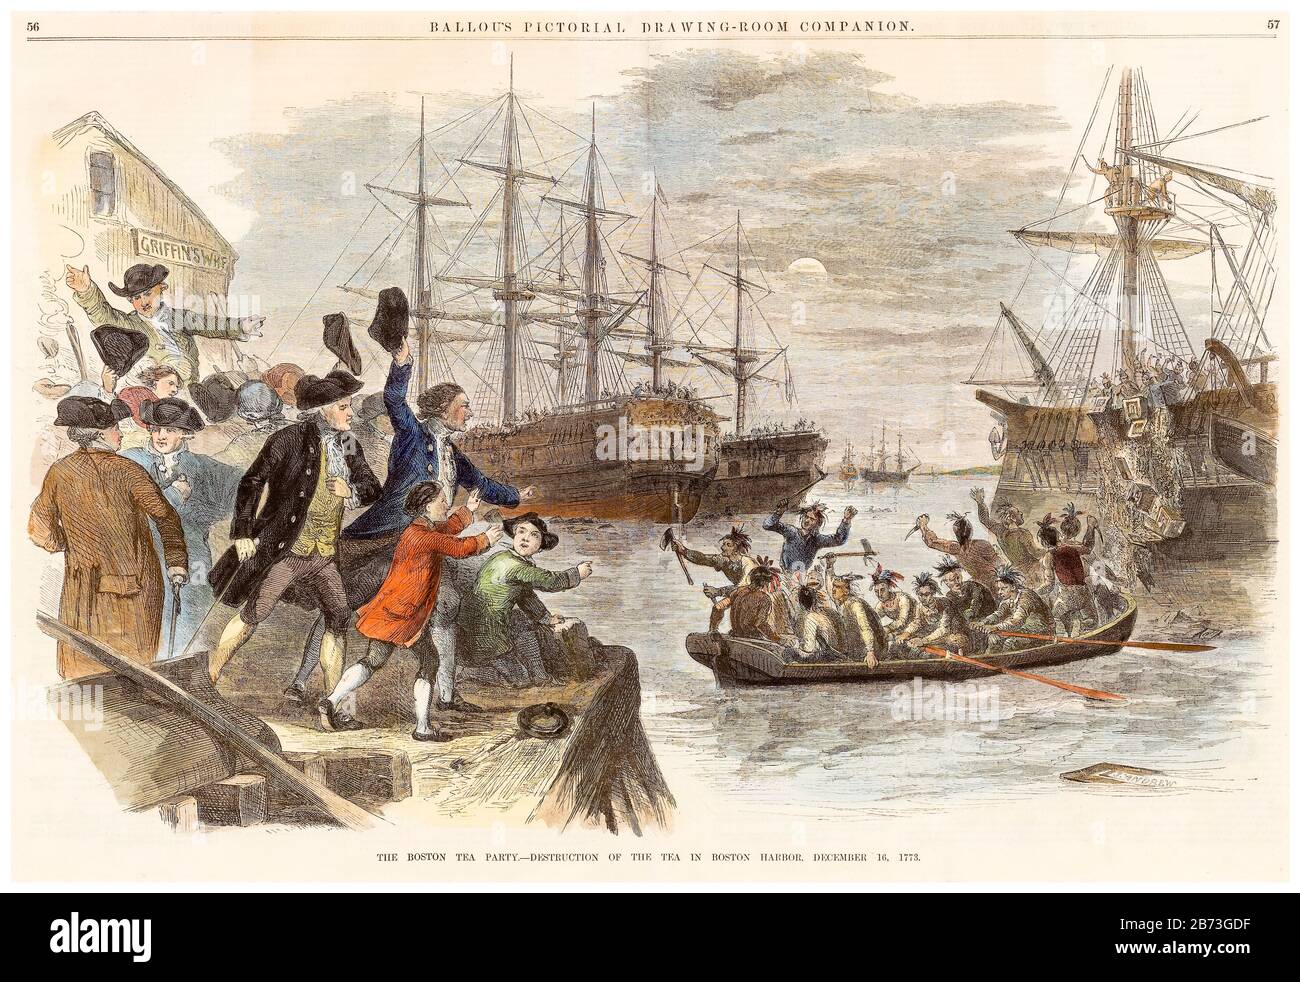 The Boston Tea Party, Destruction of the Tea in Boston Harbor, December 16th 1773, 19th Century engraving illustration by John Andrew, 1856 Stock Photo